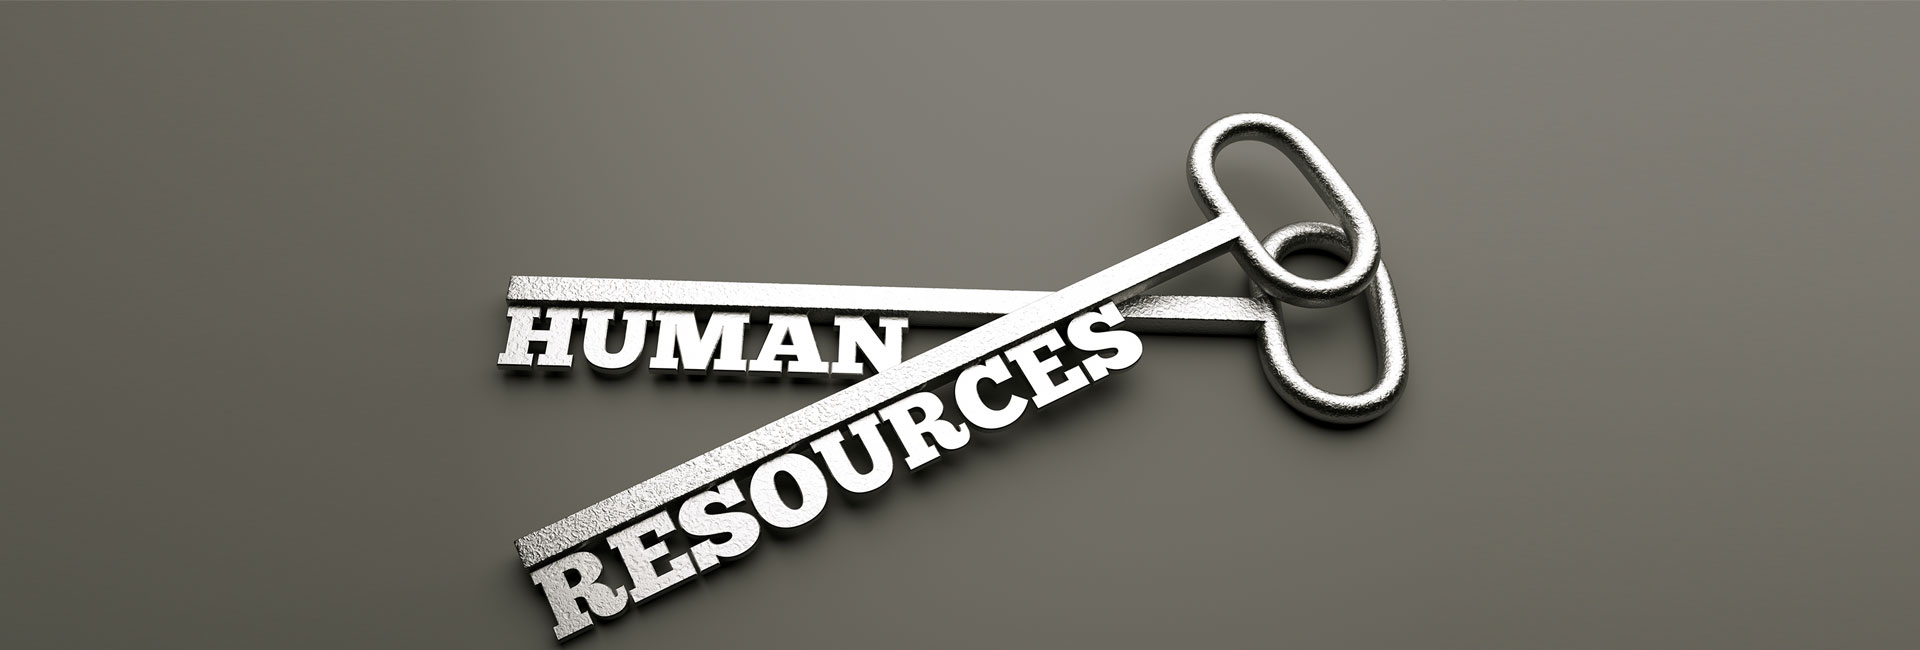 iEverware-Human Resources